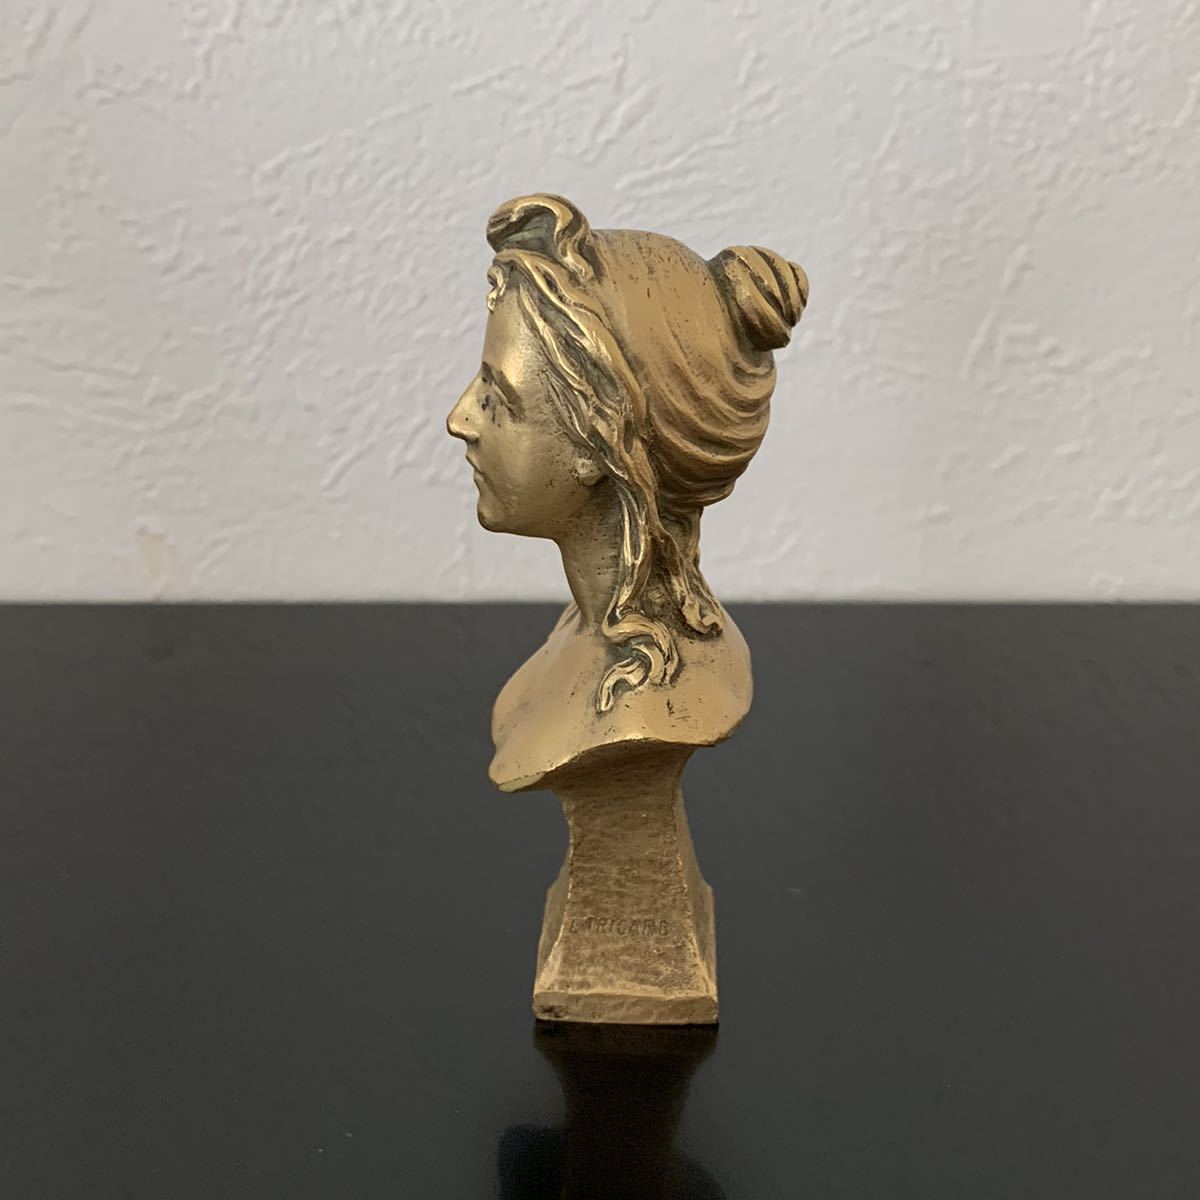 【 ENIGMA 】黄銅製 フランス製 女性モチーフ シール BOX付き 彫刻 Les parfums d'autrefois art nouveau アールヌーボー 真鍮_L.TRICAROの刻あり